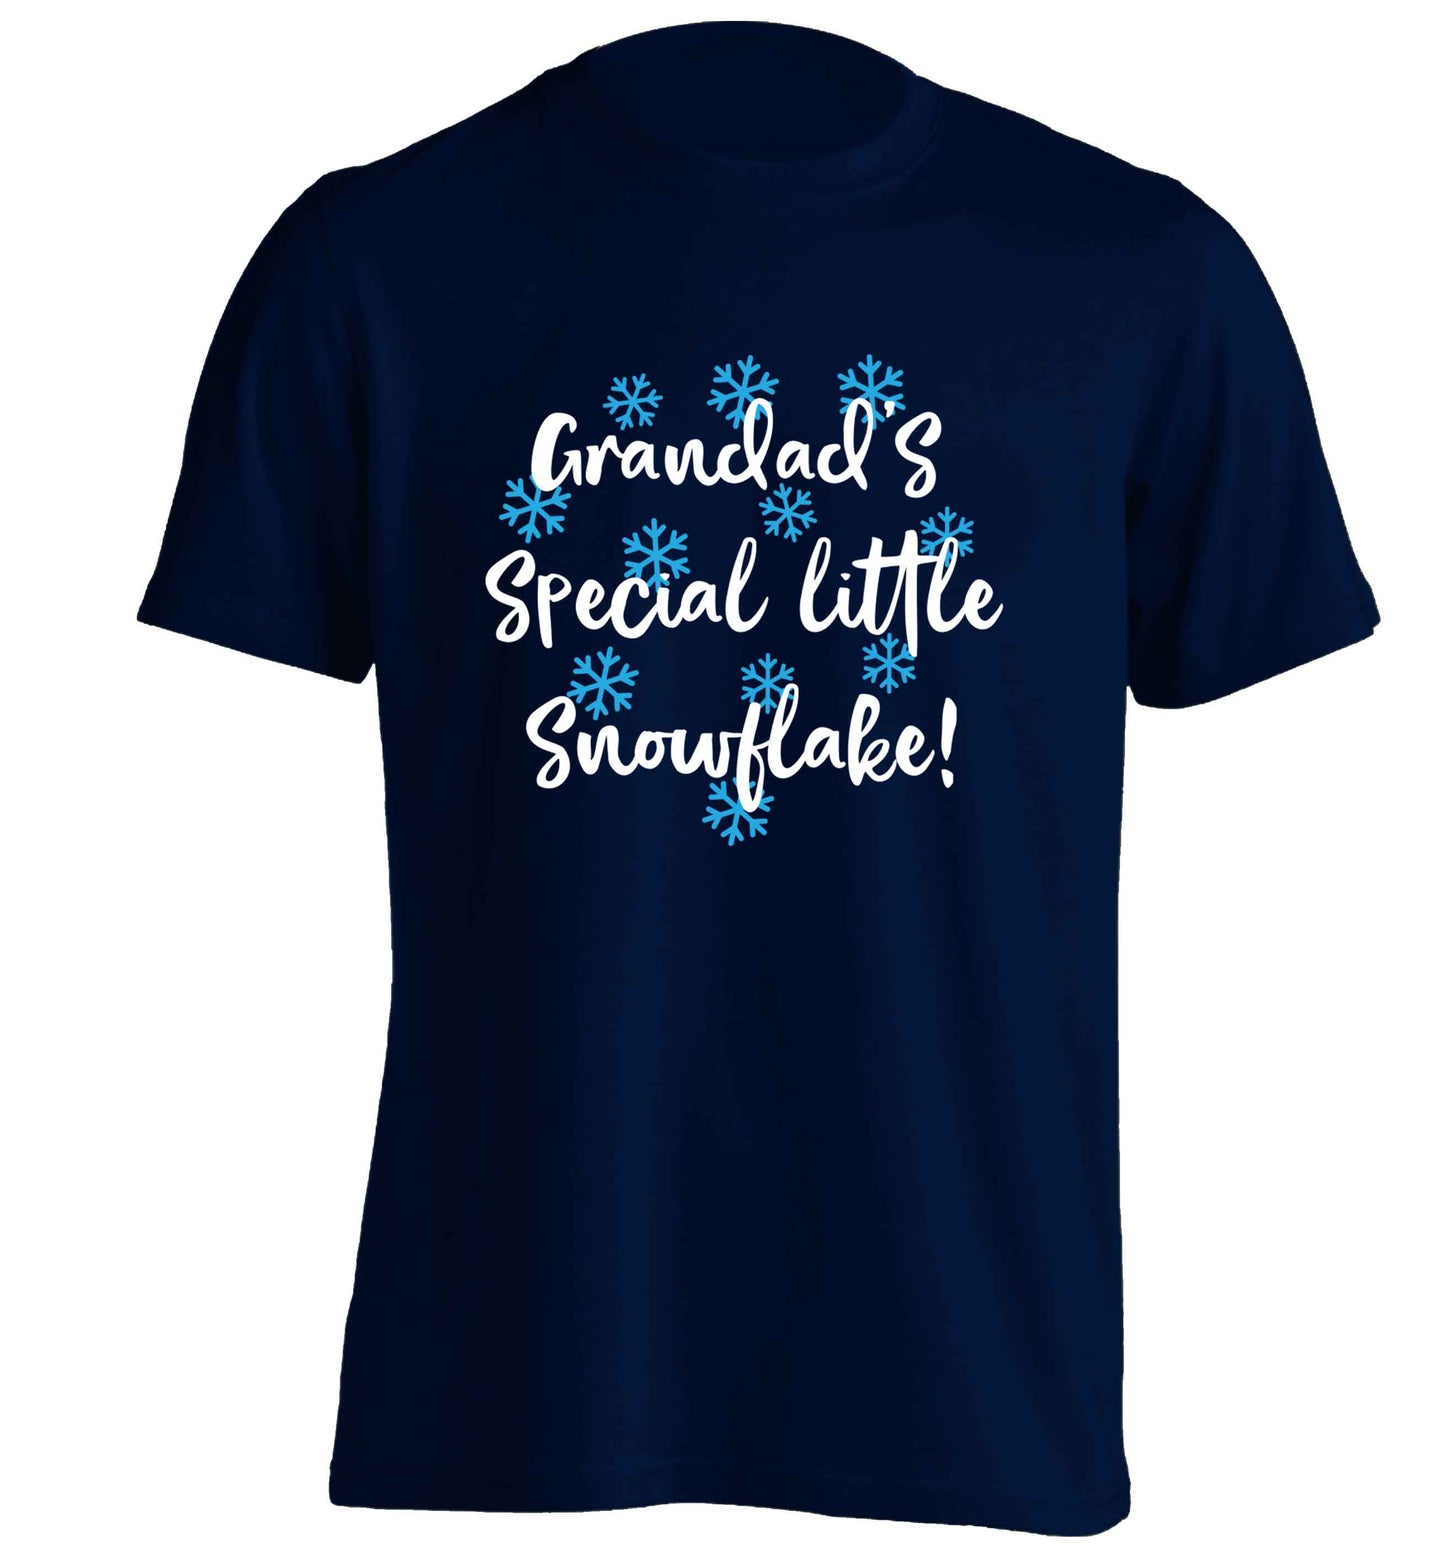 Grandad's special little snowflake adults unisex navy Tshirt 2XL